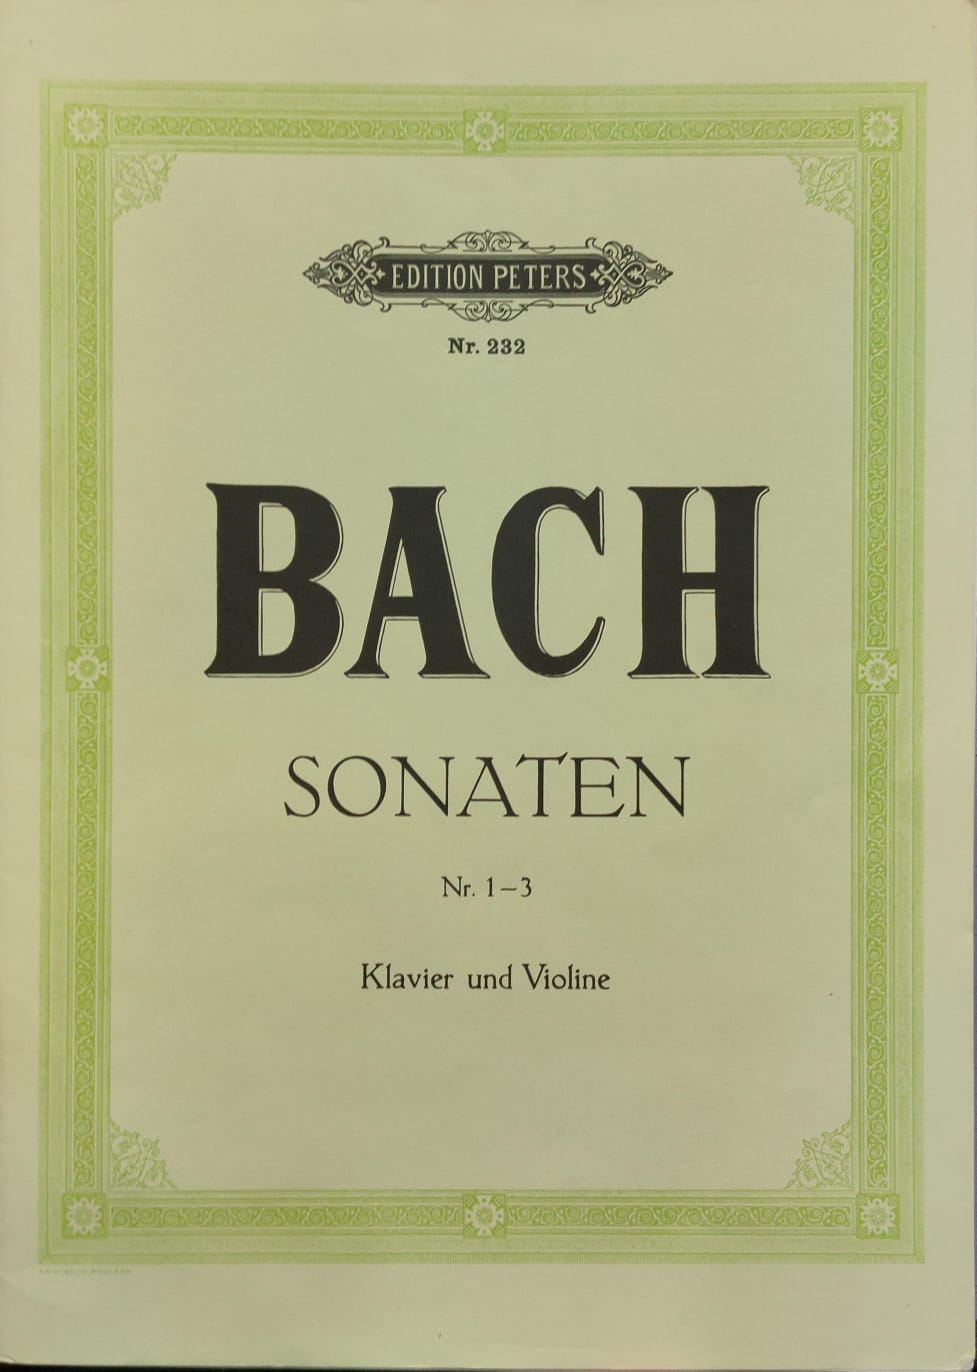 J. S. Bach: Sonata No. 1-3